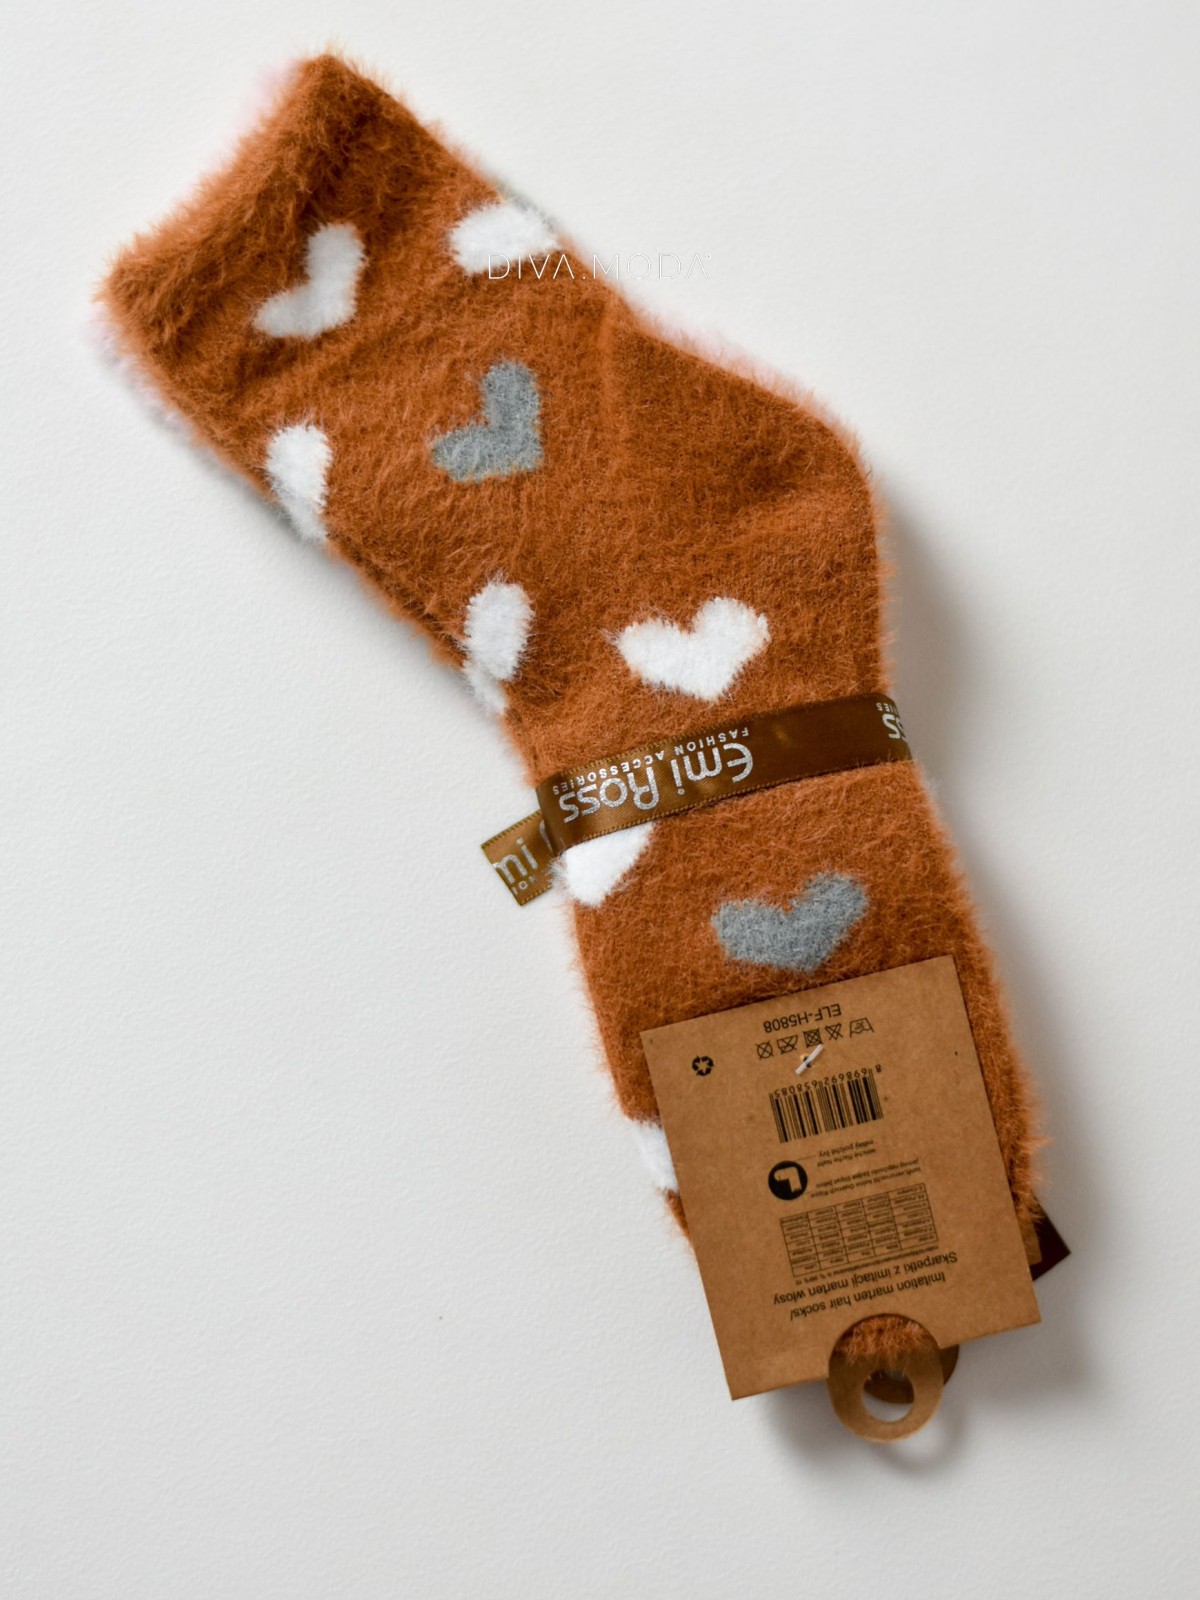 Duo jemně chlupatých srdíčkových ponožek skořicovo-růžové M 17